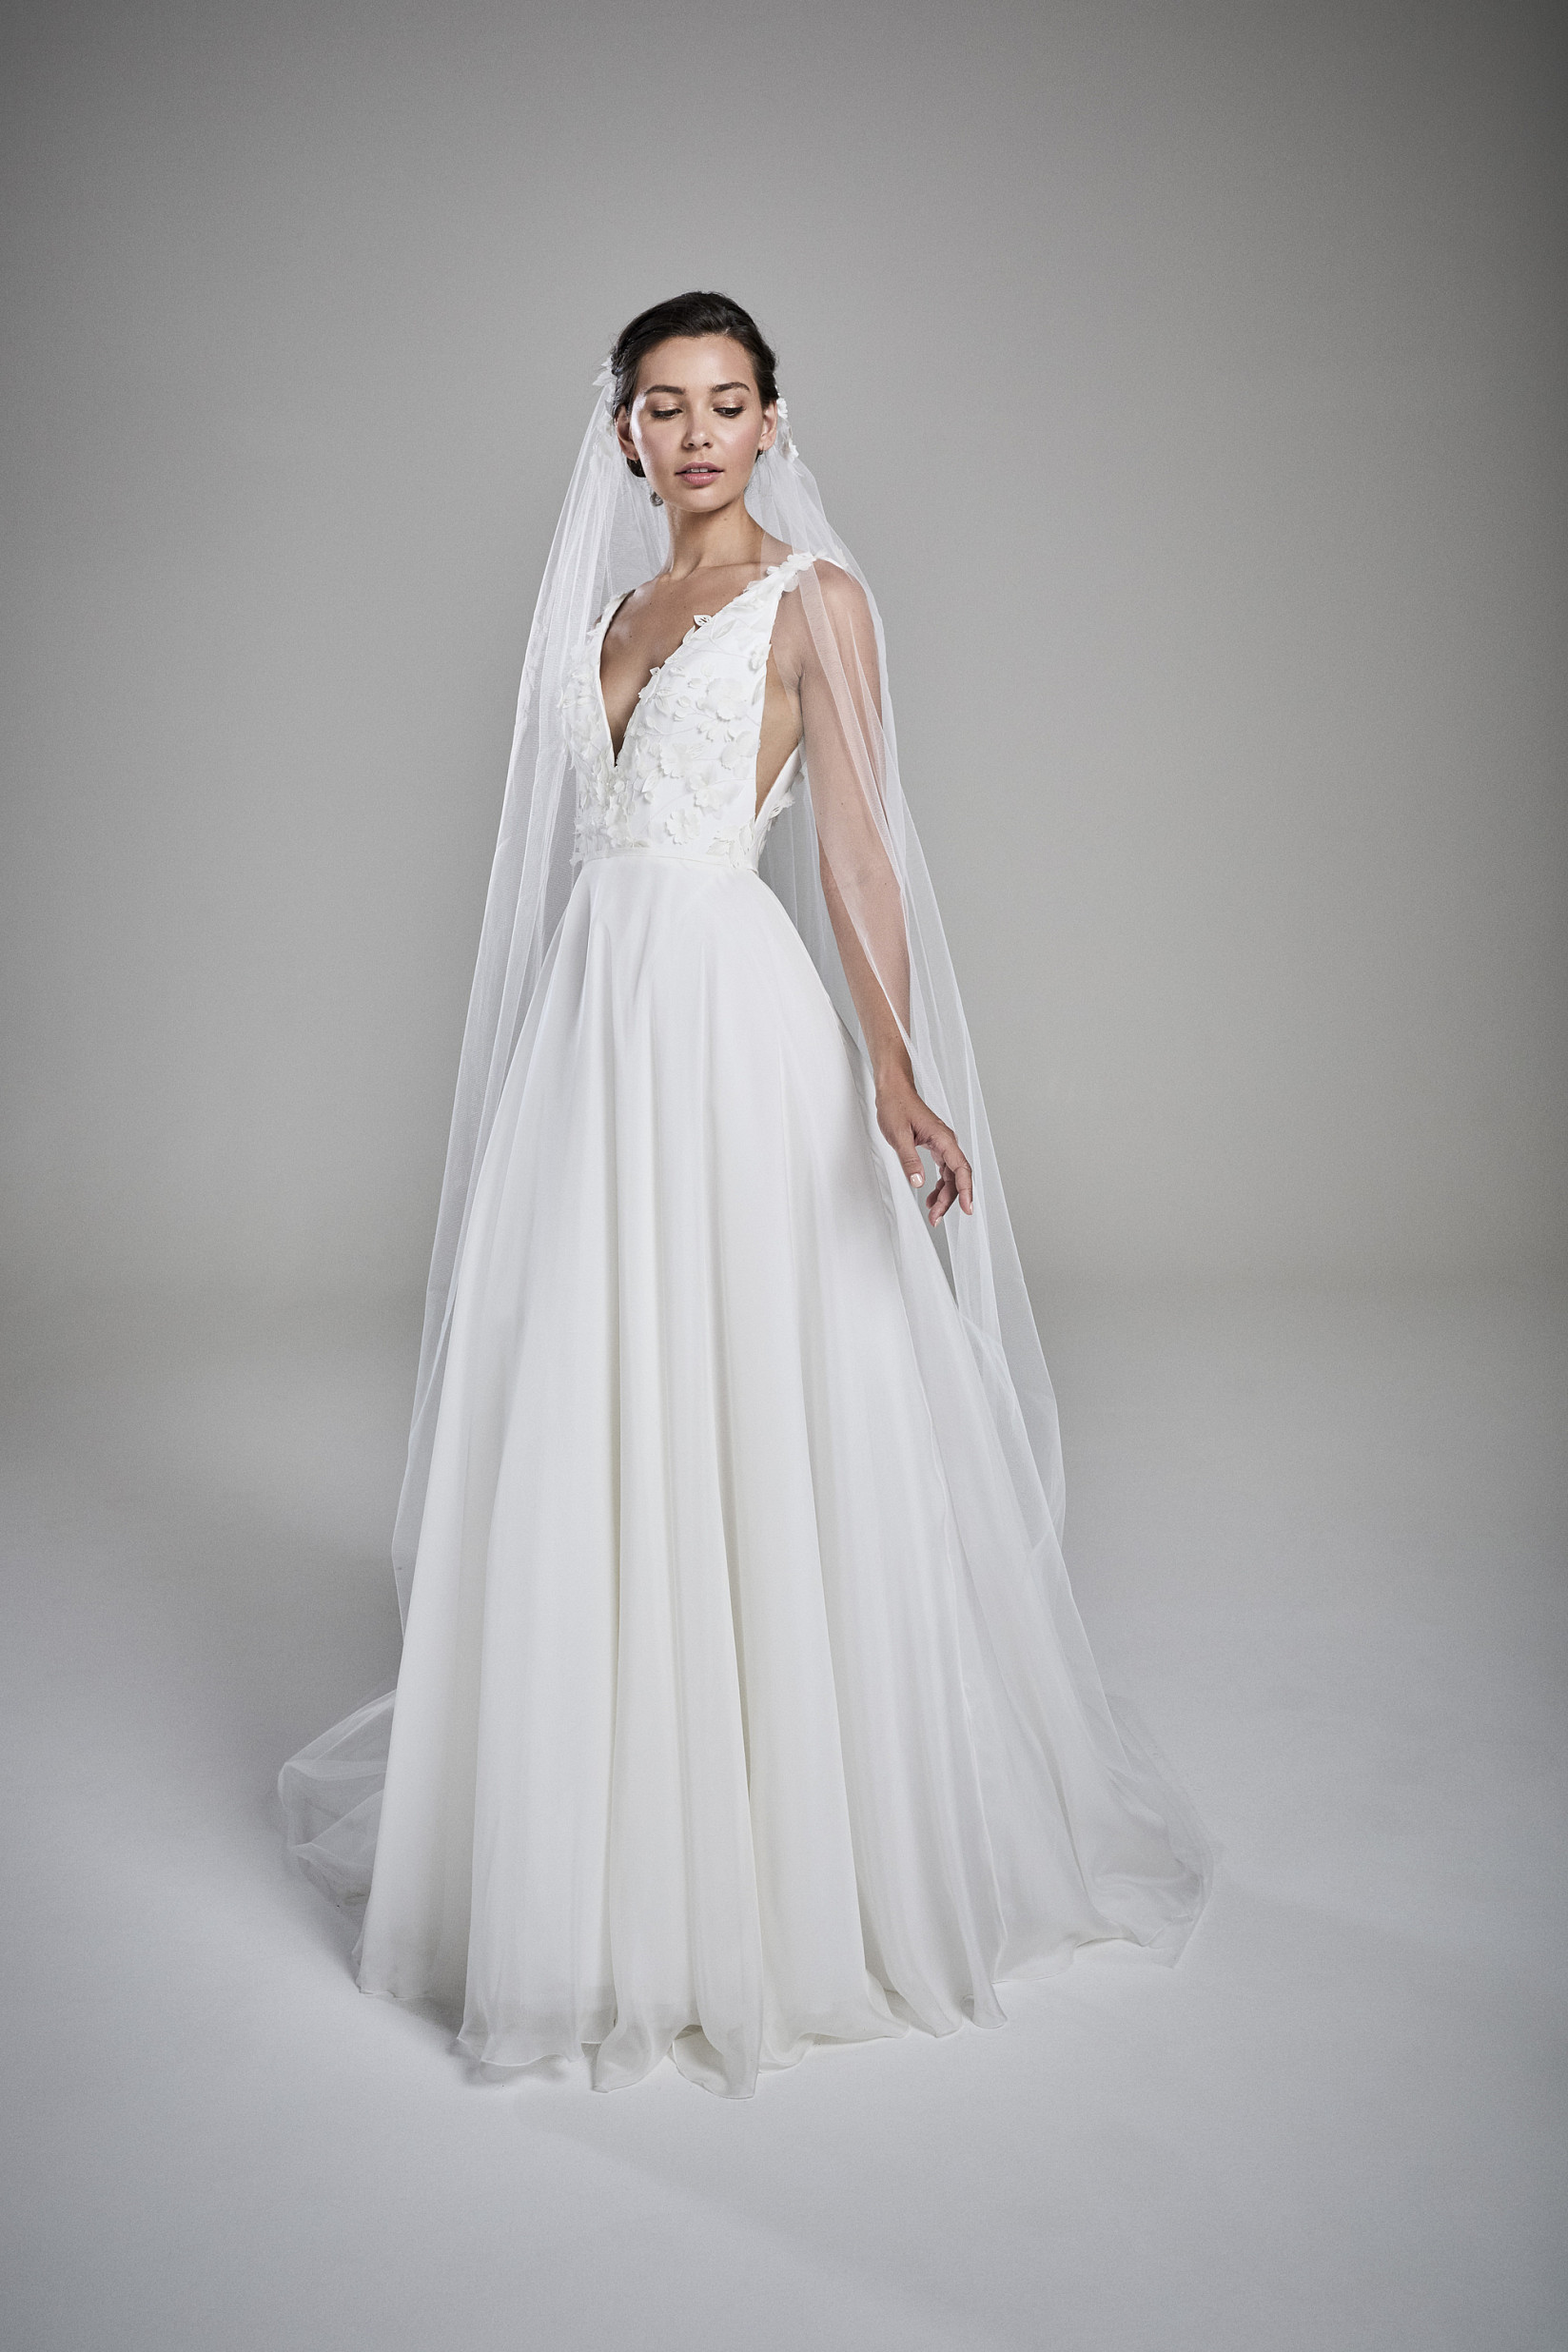 Martaize Wedding Dress - Wedding Atelier NYC Suzanne Neville - New York City